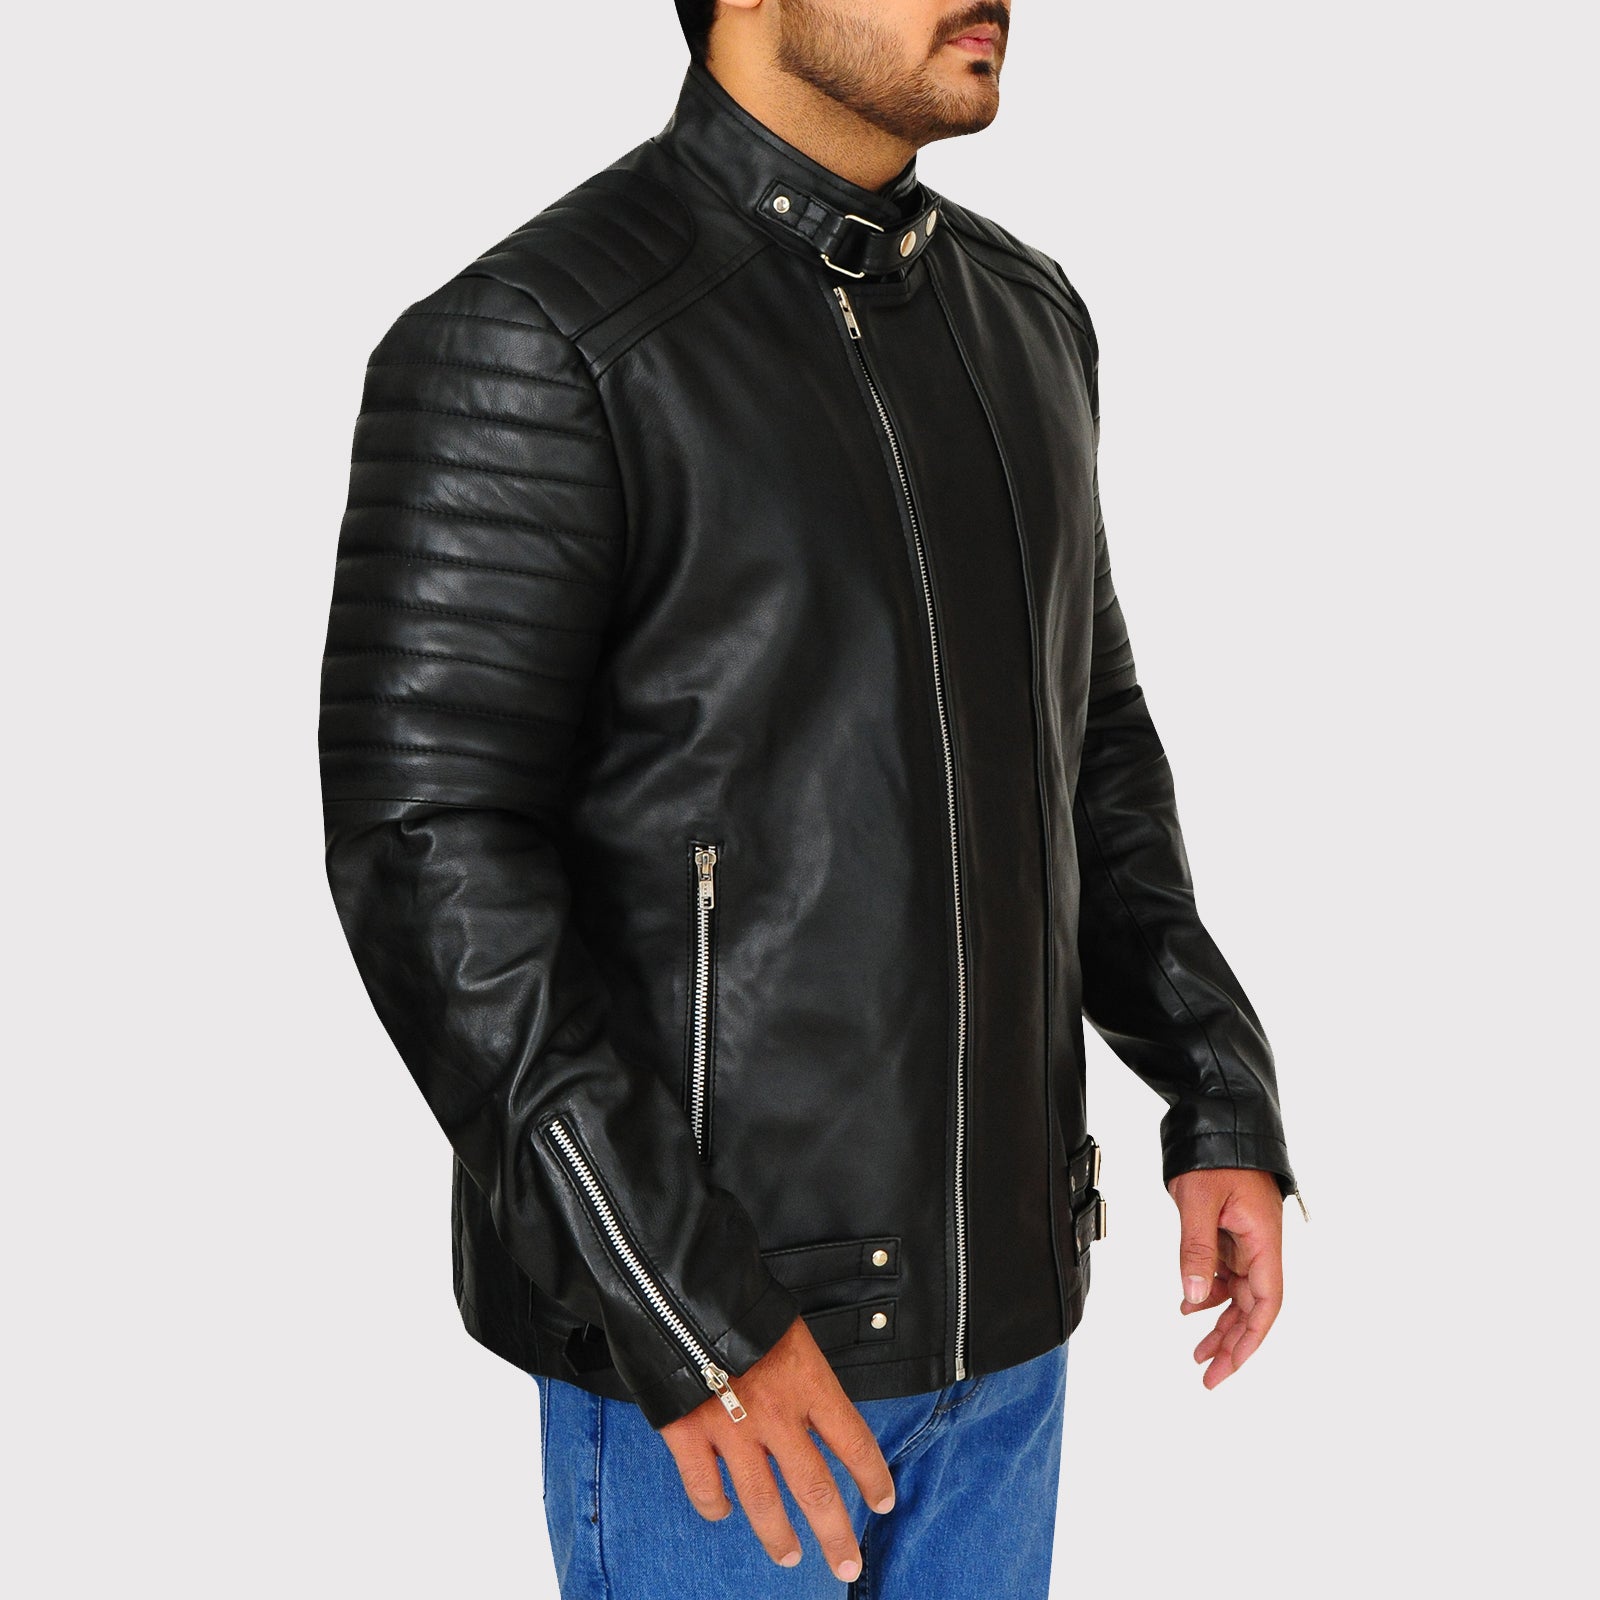 Pitch Black Snap Tab Leather Jacket - Stylish Outerwear